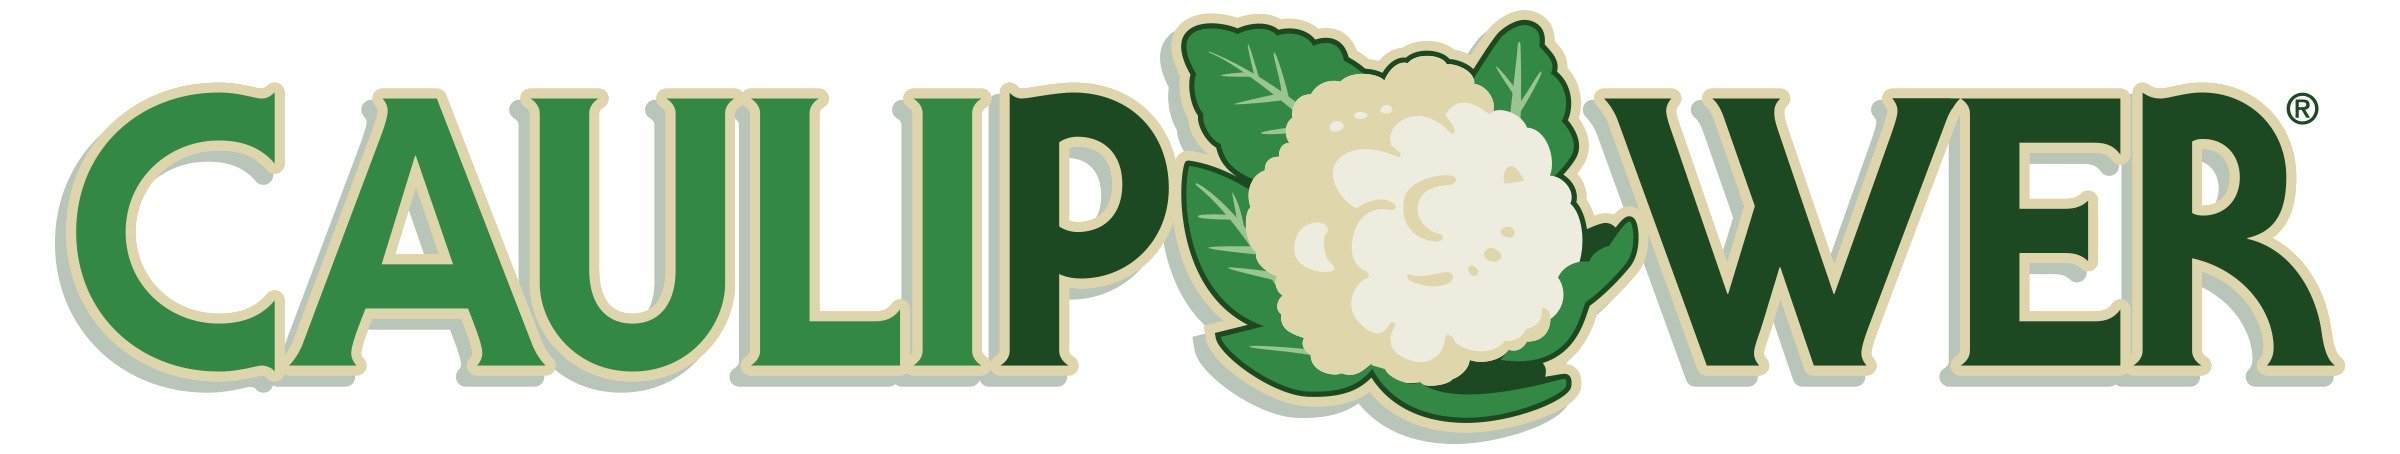 CAULIPOWER Logo (R) (1)_JPEG copy.jpg